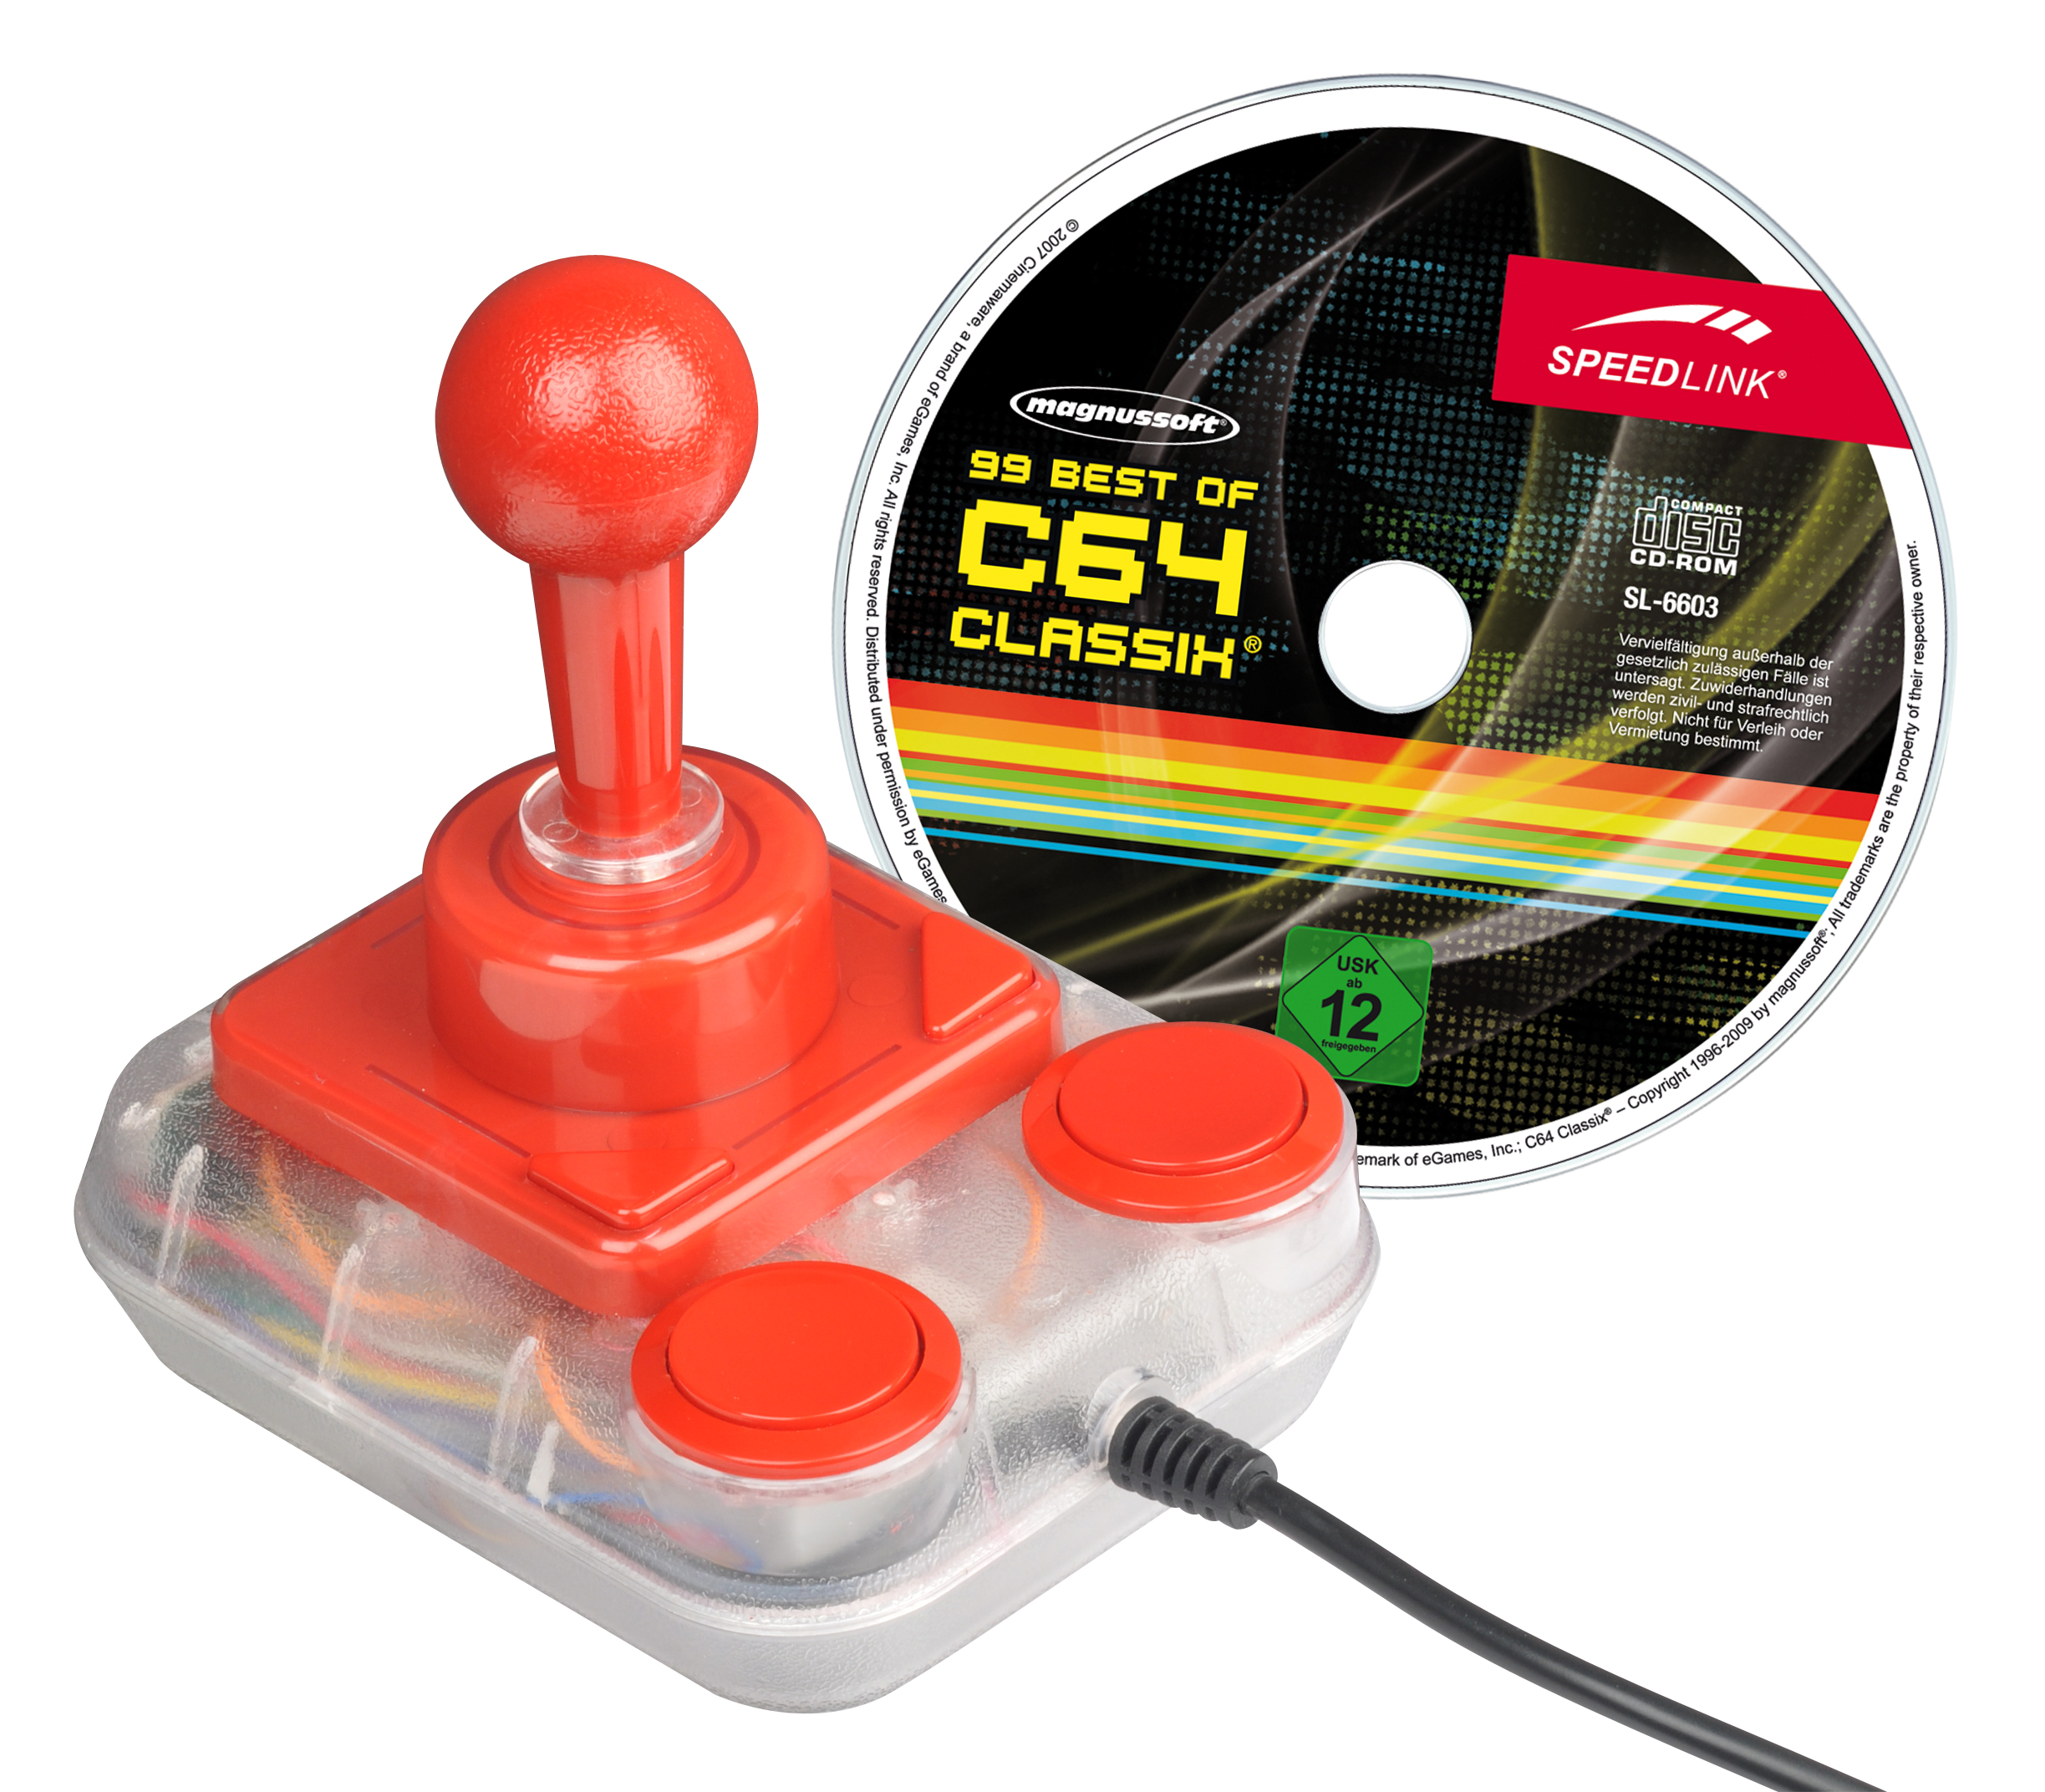 Competition Pro USB Joystick + \'99 Best of C64 Classix®\' Games Collection,  Jöllenbeck GmbH, Story - PresseBox